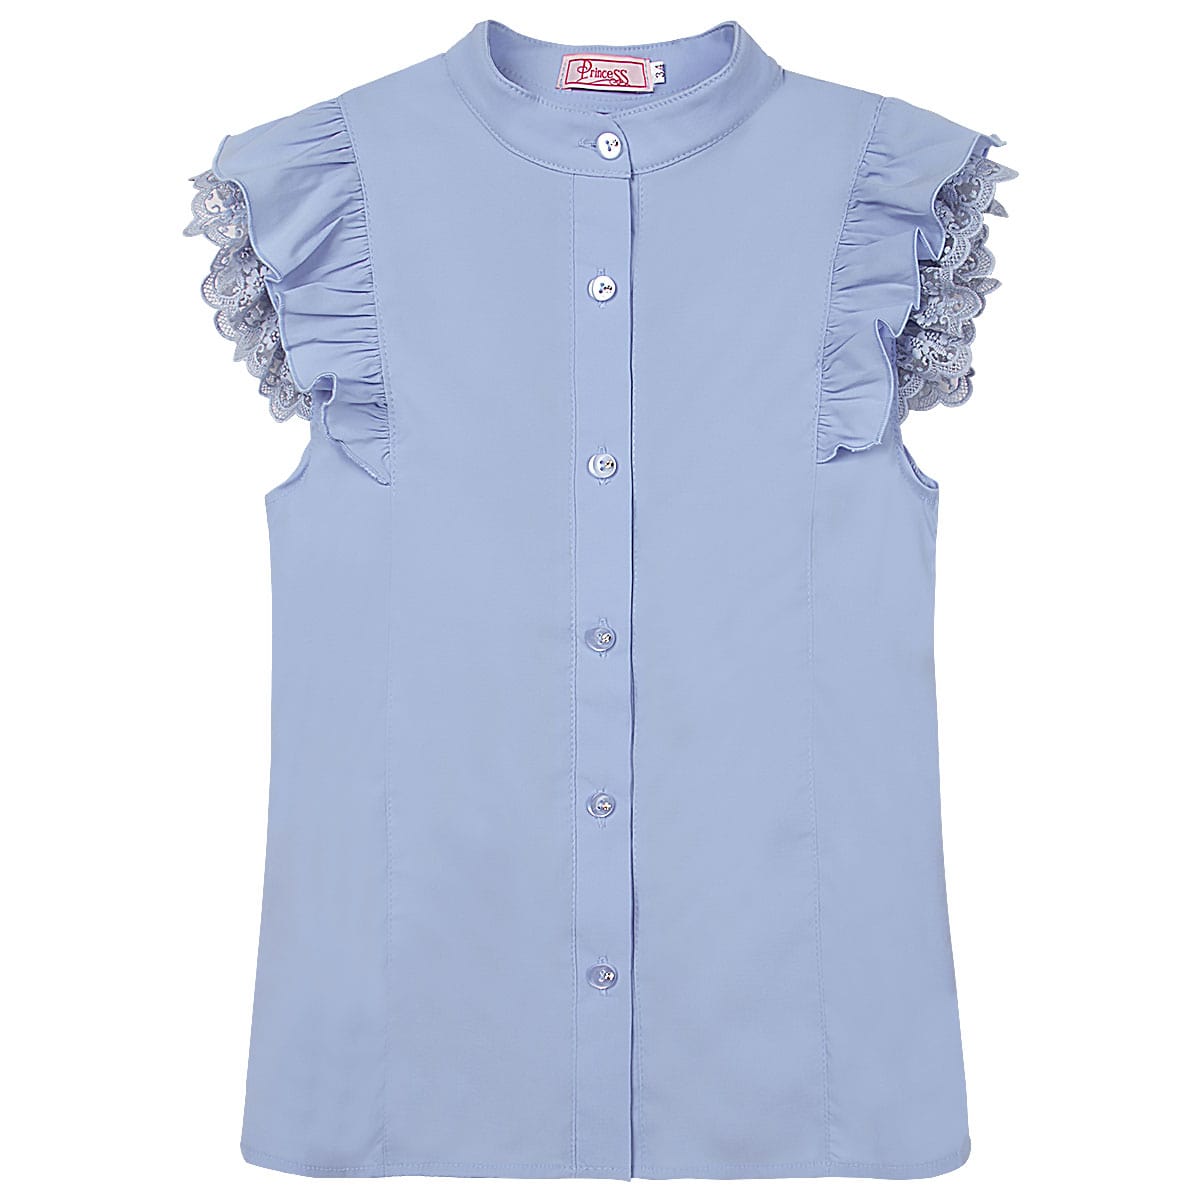 Блузка Техноткань голубого цвета для девочки